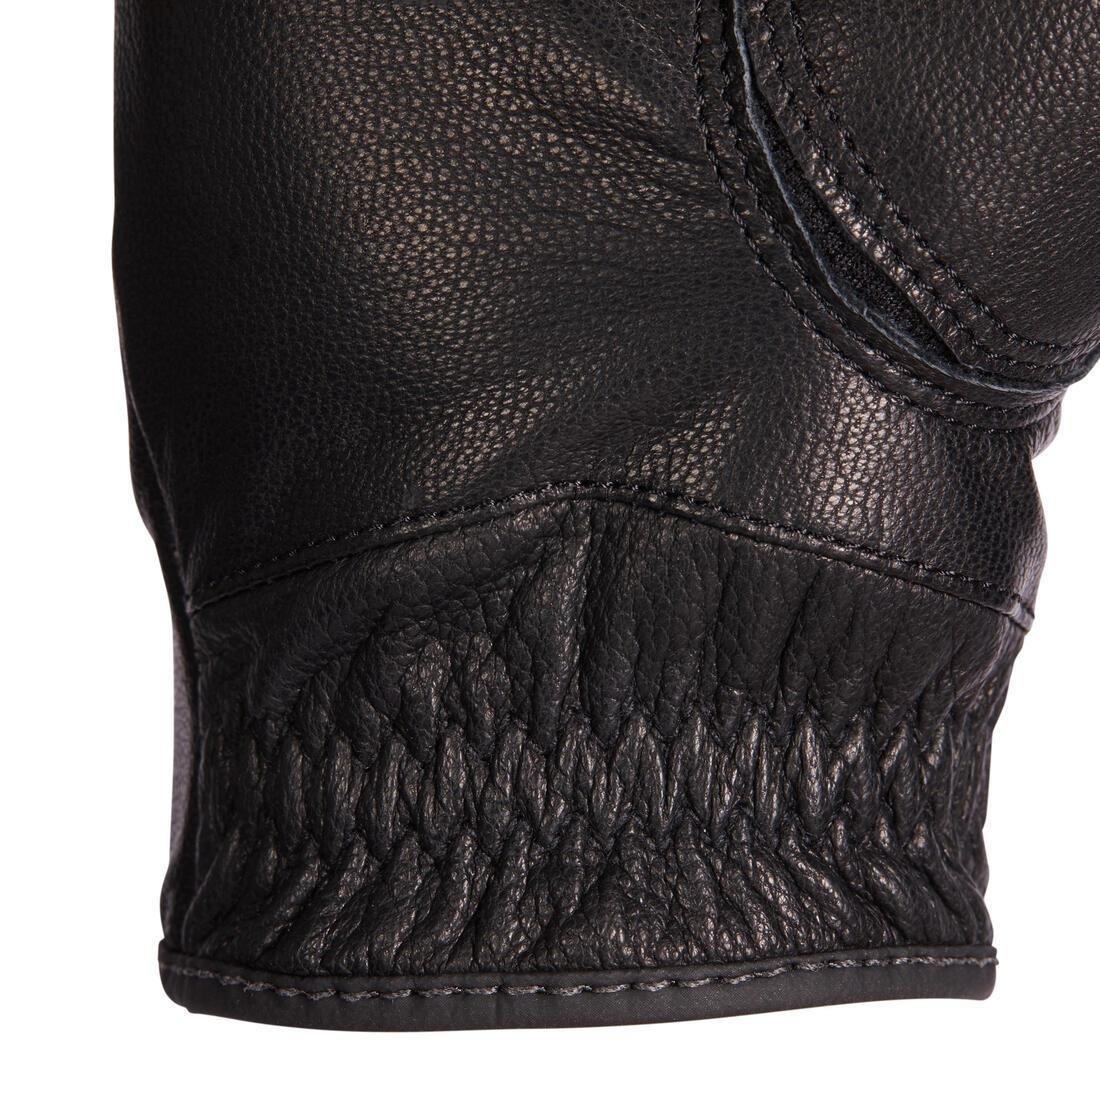 FOUGANZA - Women Horse Riding Leather Gloves 960 - Black